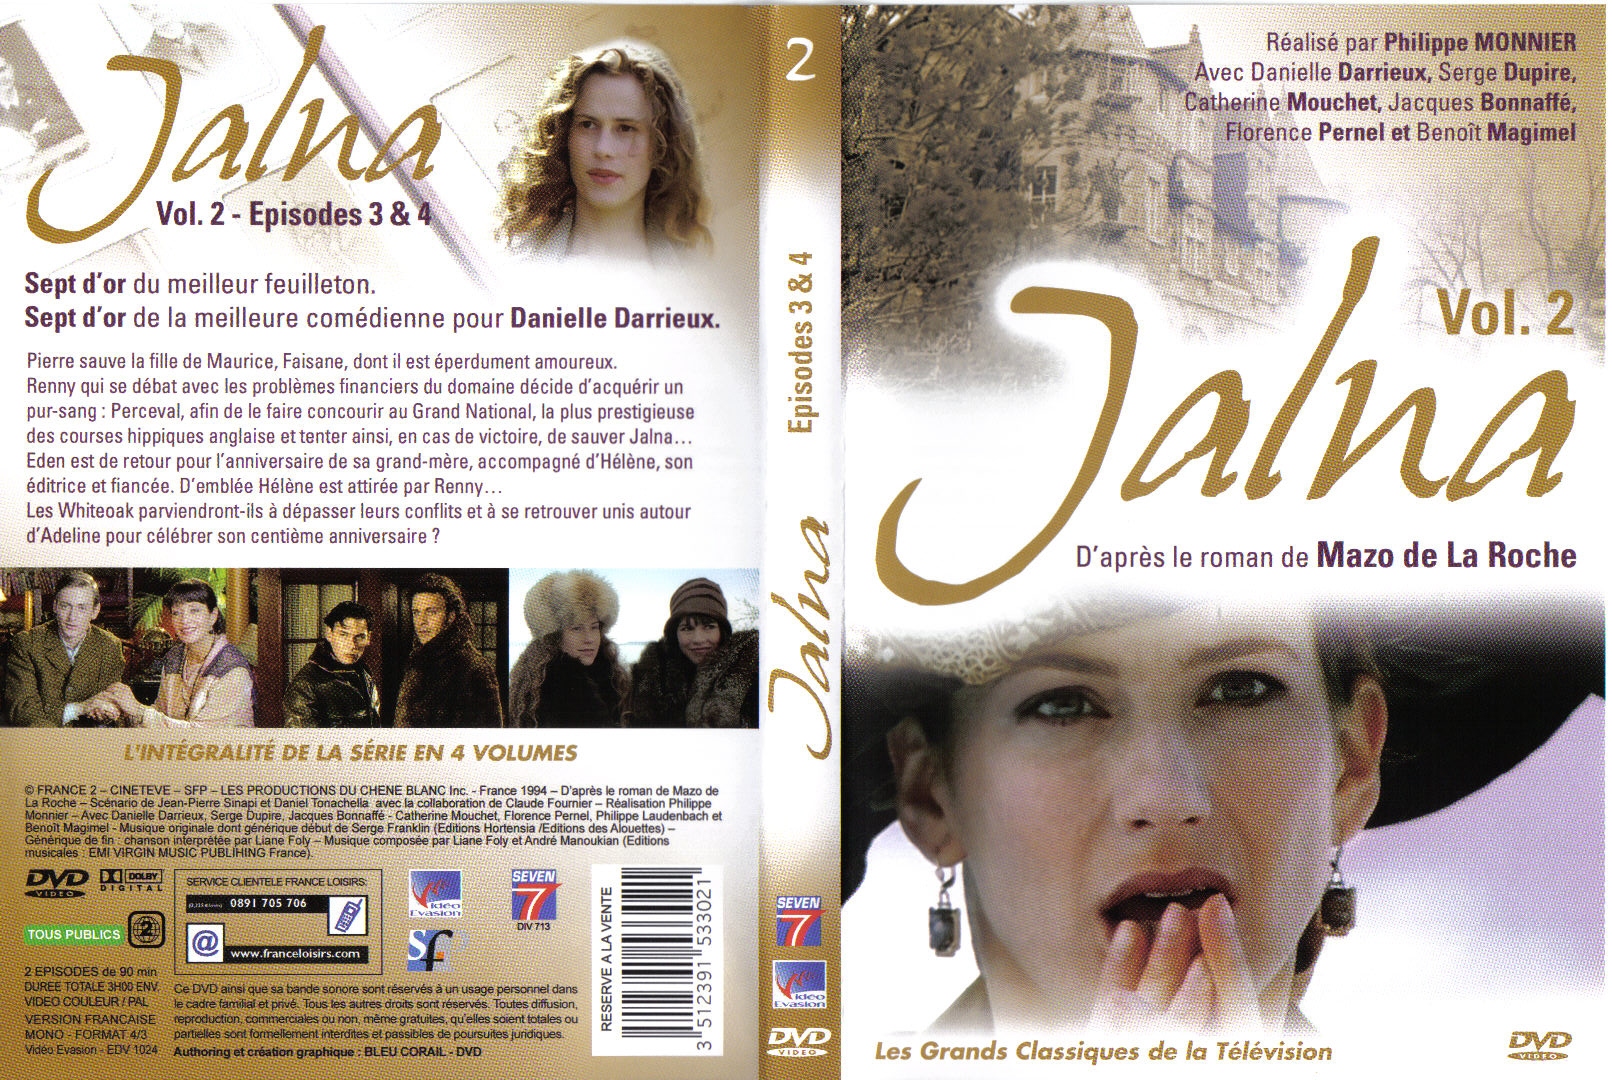 Jaquette DVD Jalna vol 2